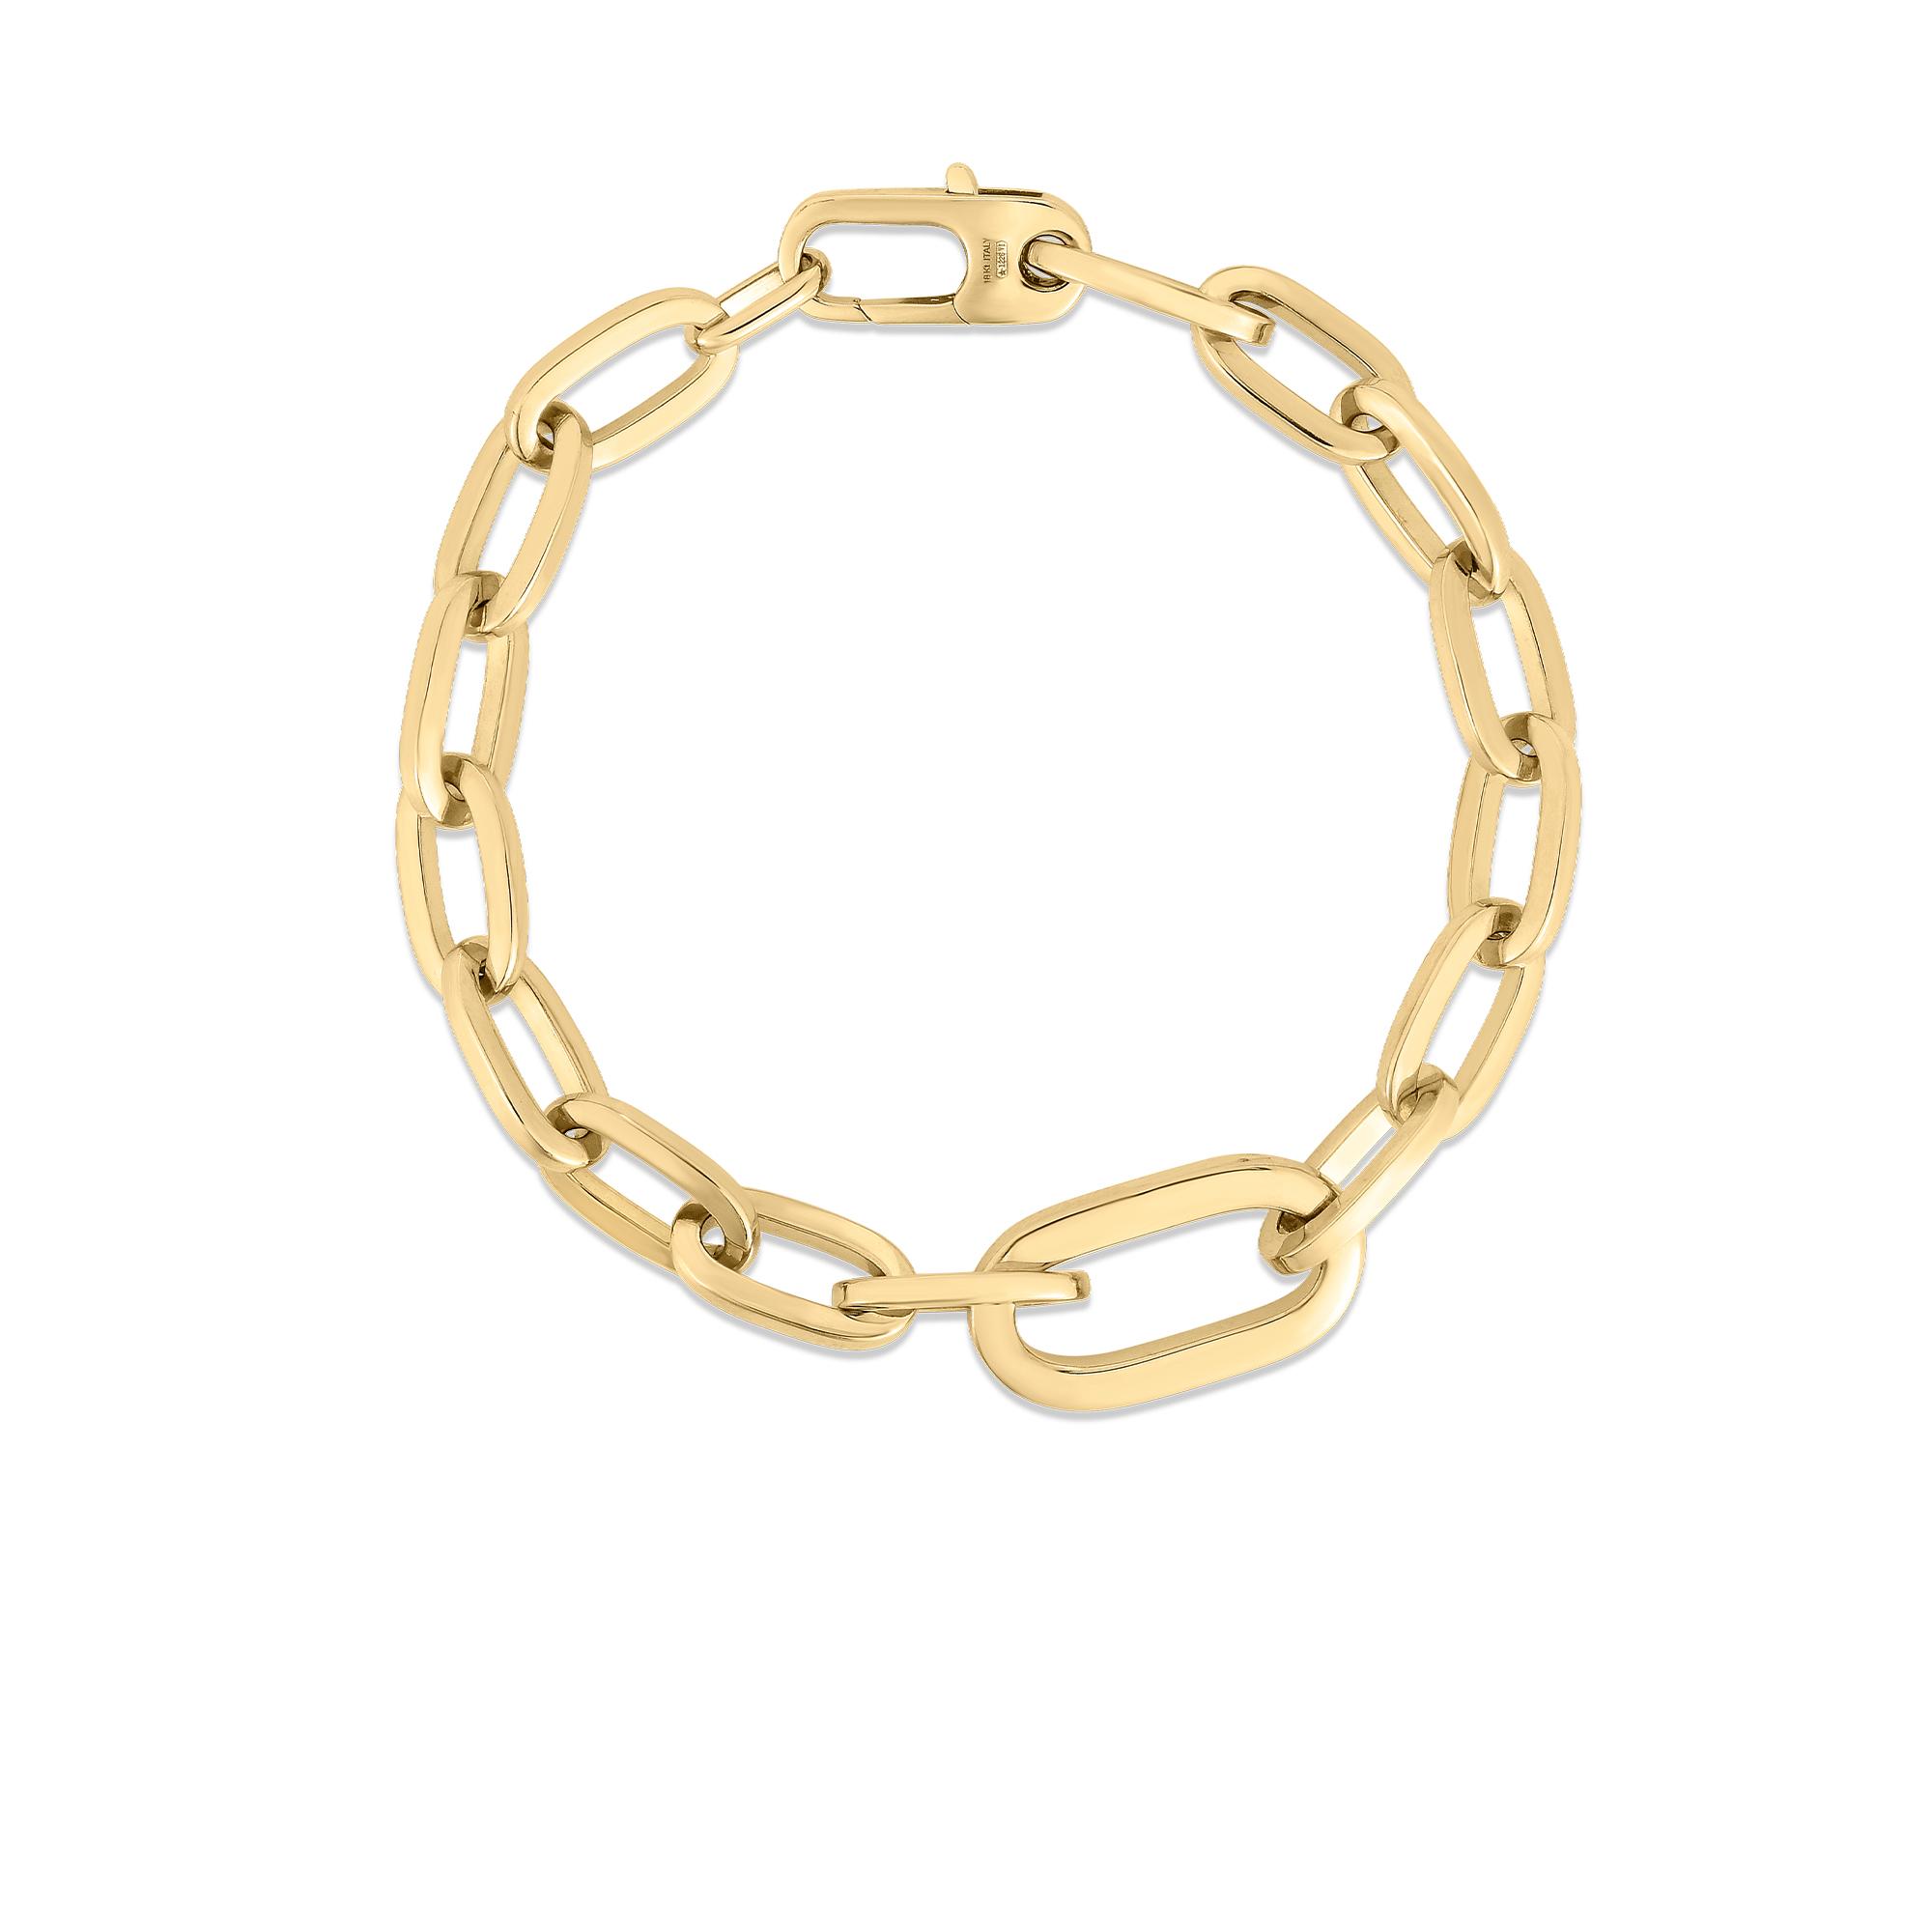 Roberto Coin Designer Gold Paperclip Bracelet with Large Center Link